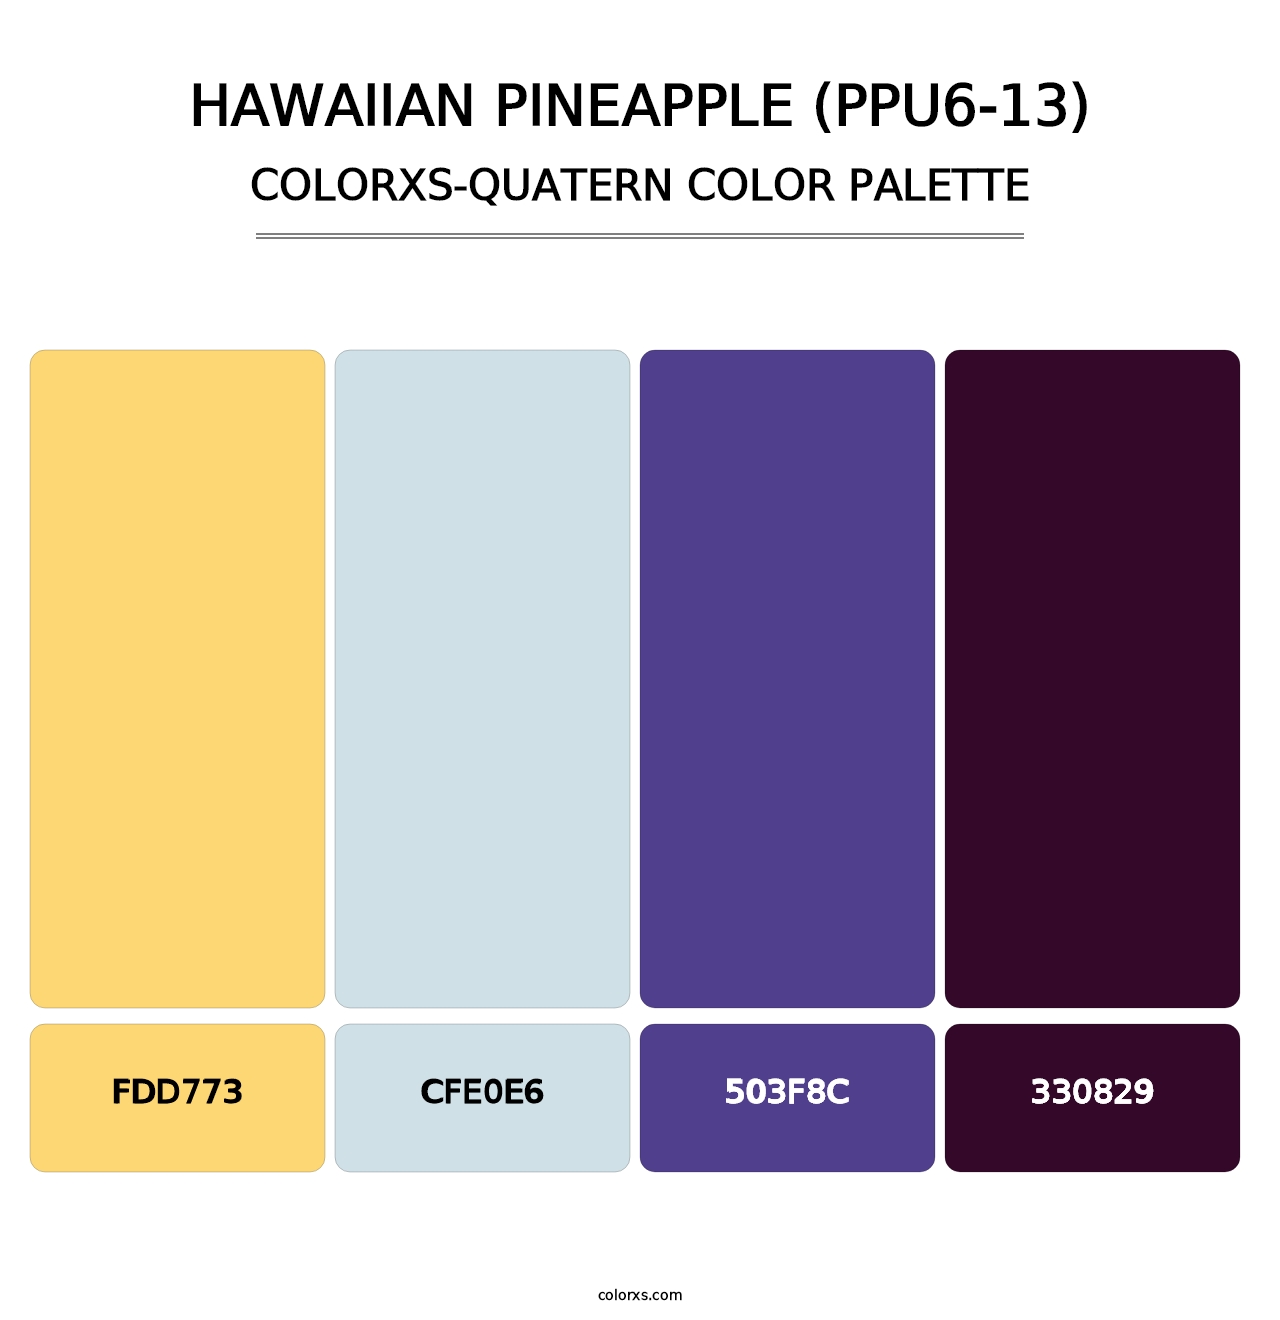 Hawaiian Pineapple (PPU6-13) - Colorxs Quatern Palette